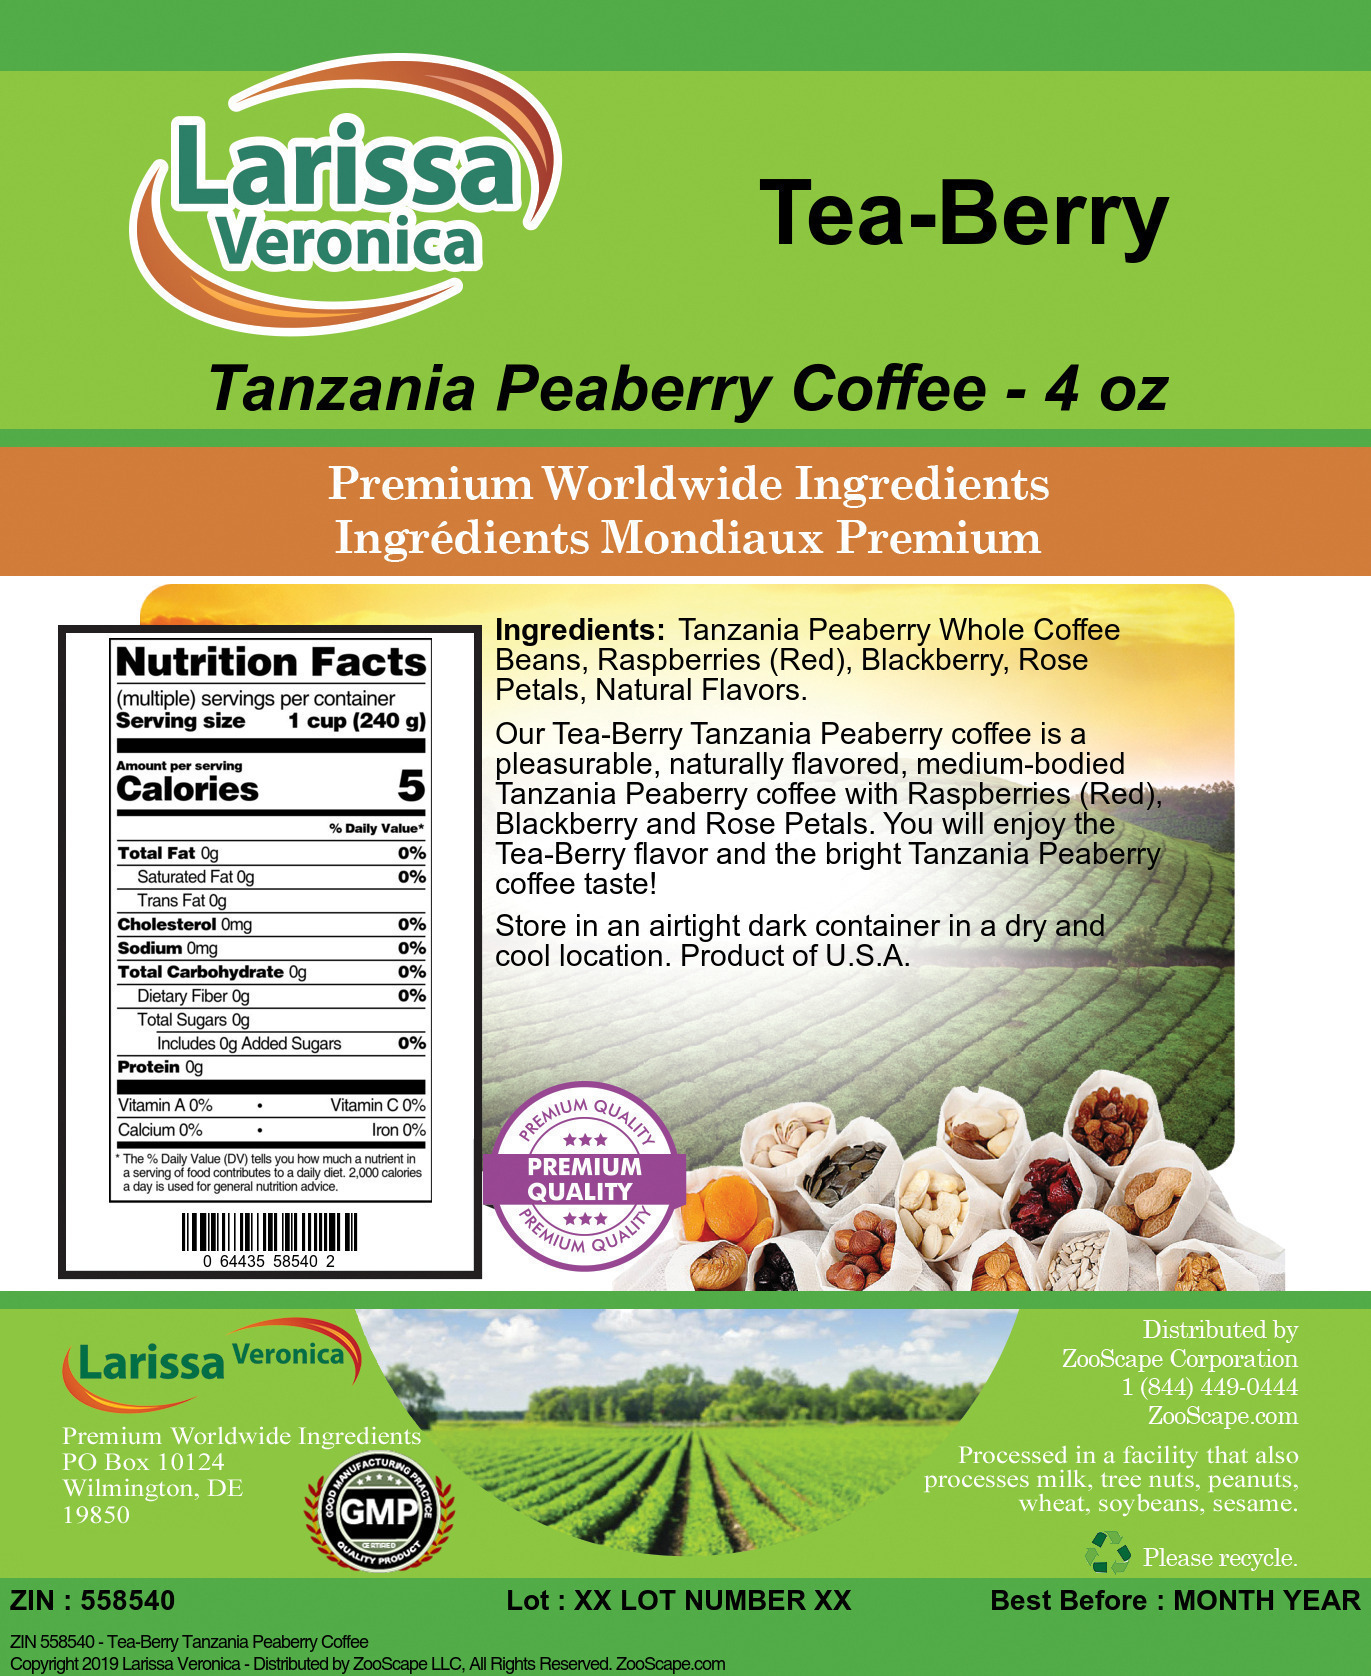 Tea-Berry Tanzania Peaberry Coffee - Label